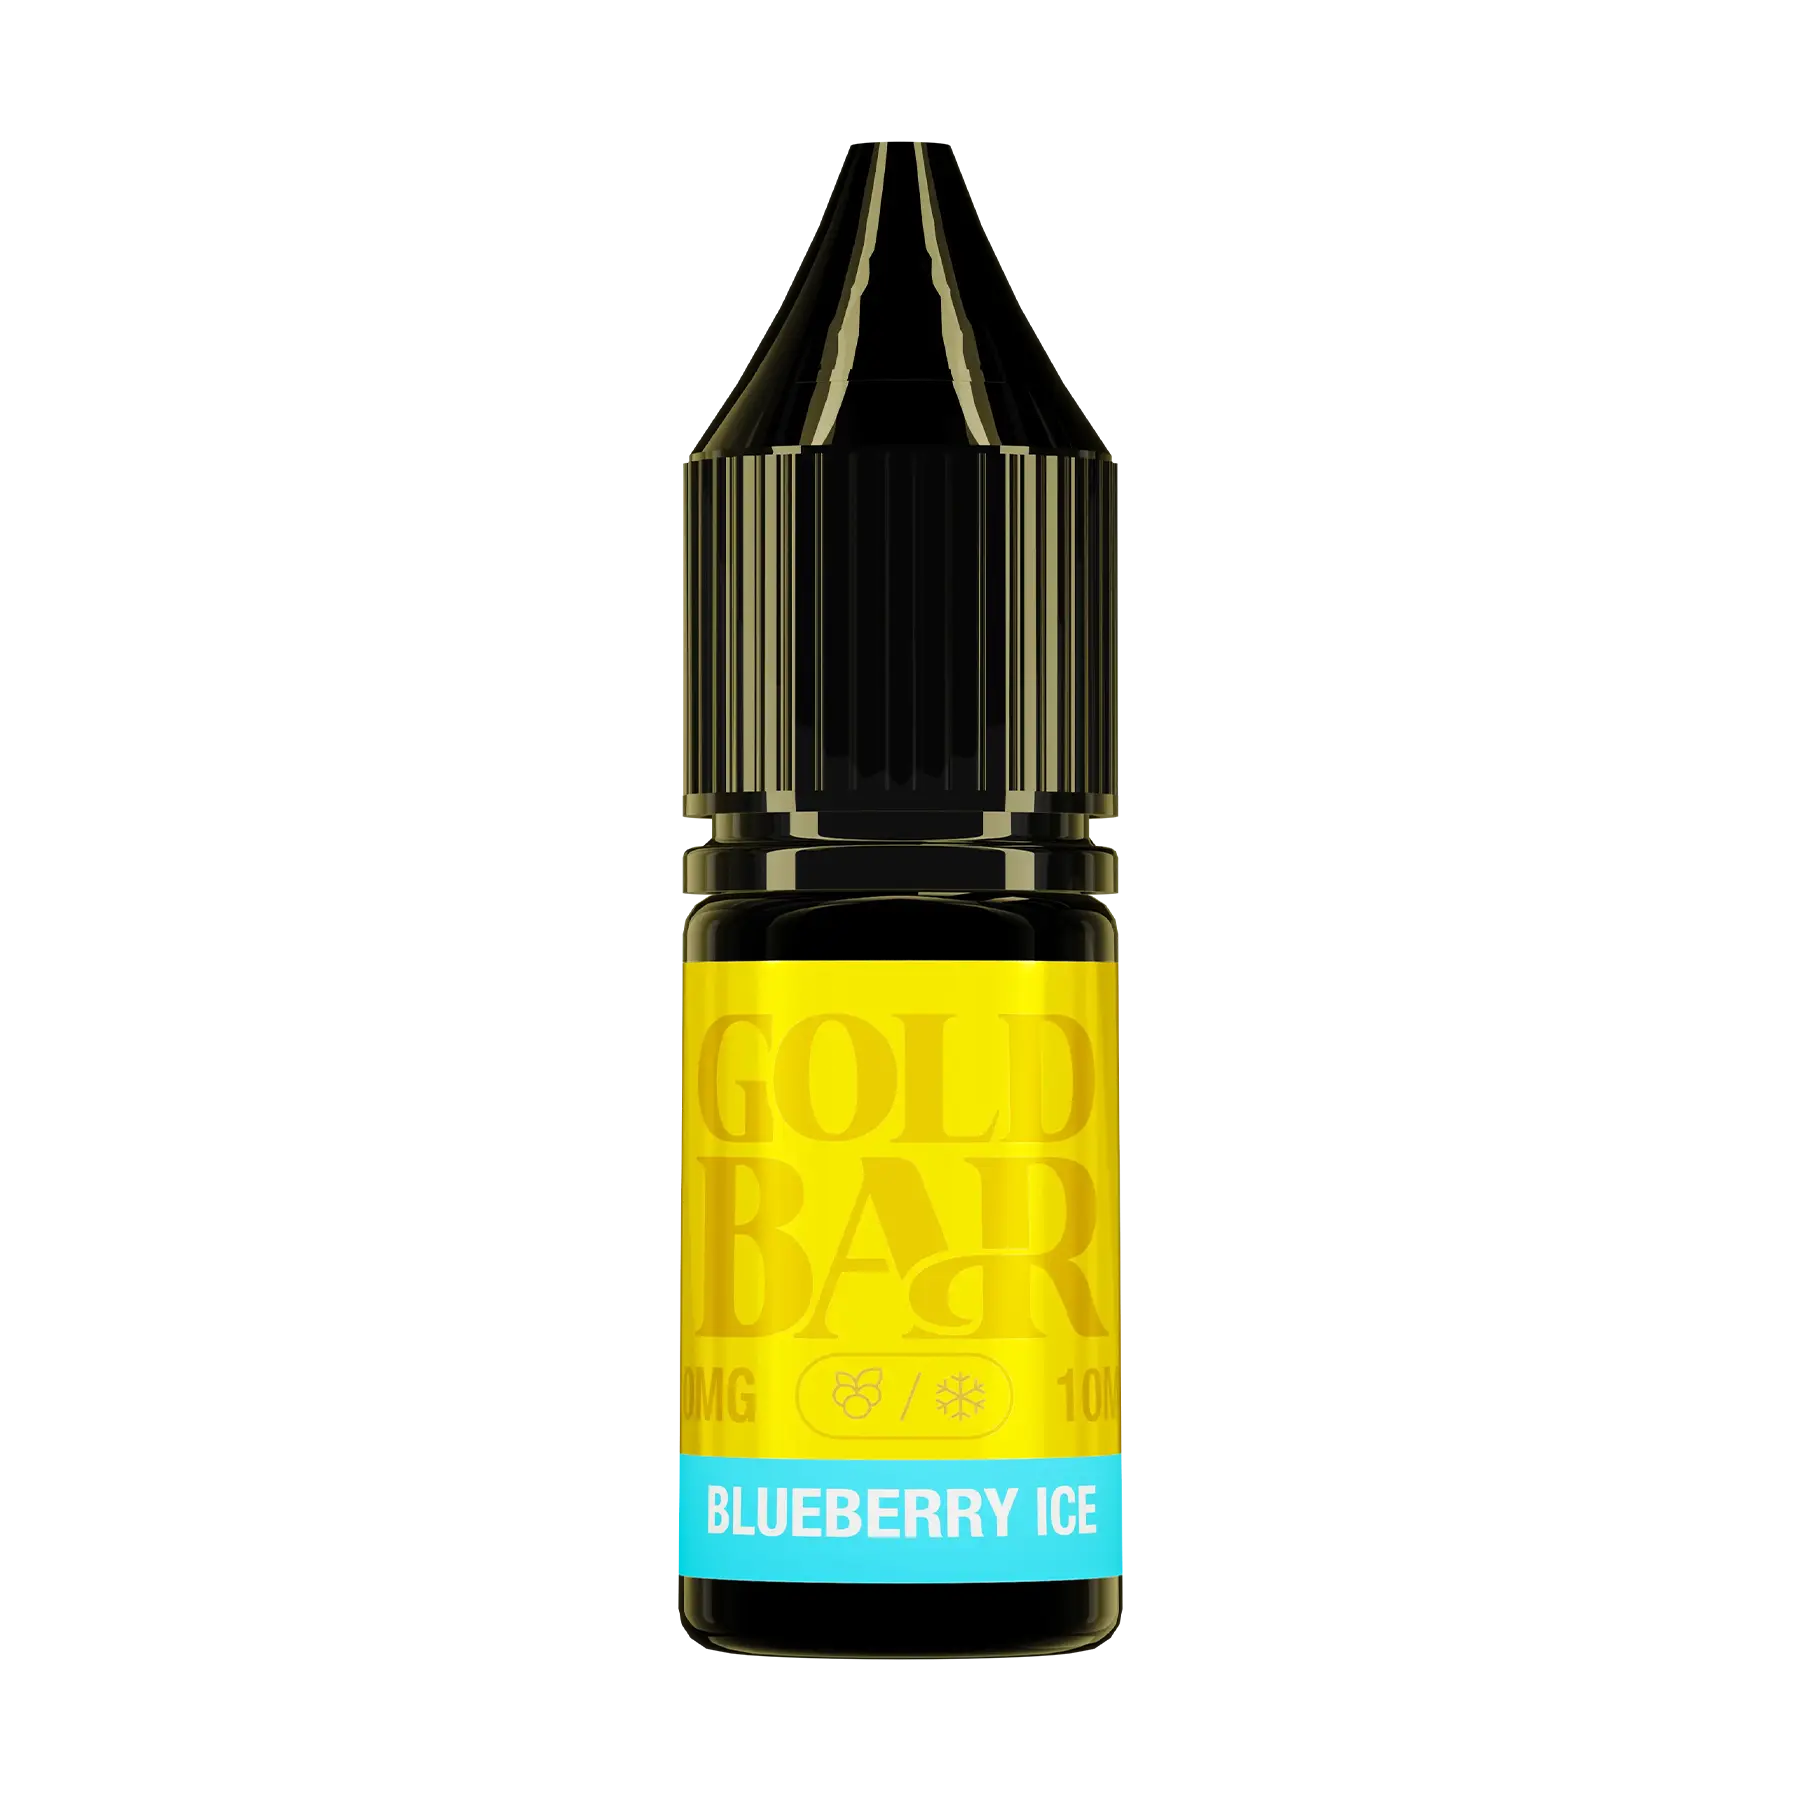 Gold Bar - Blueberry Ice 10ml E Liquid Nicotine Salt